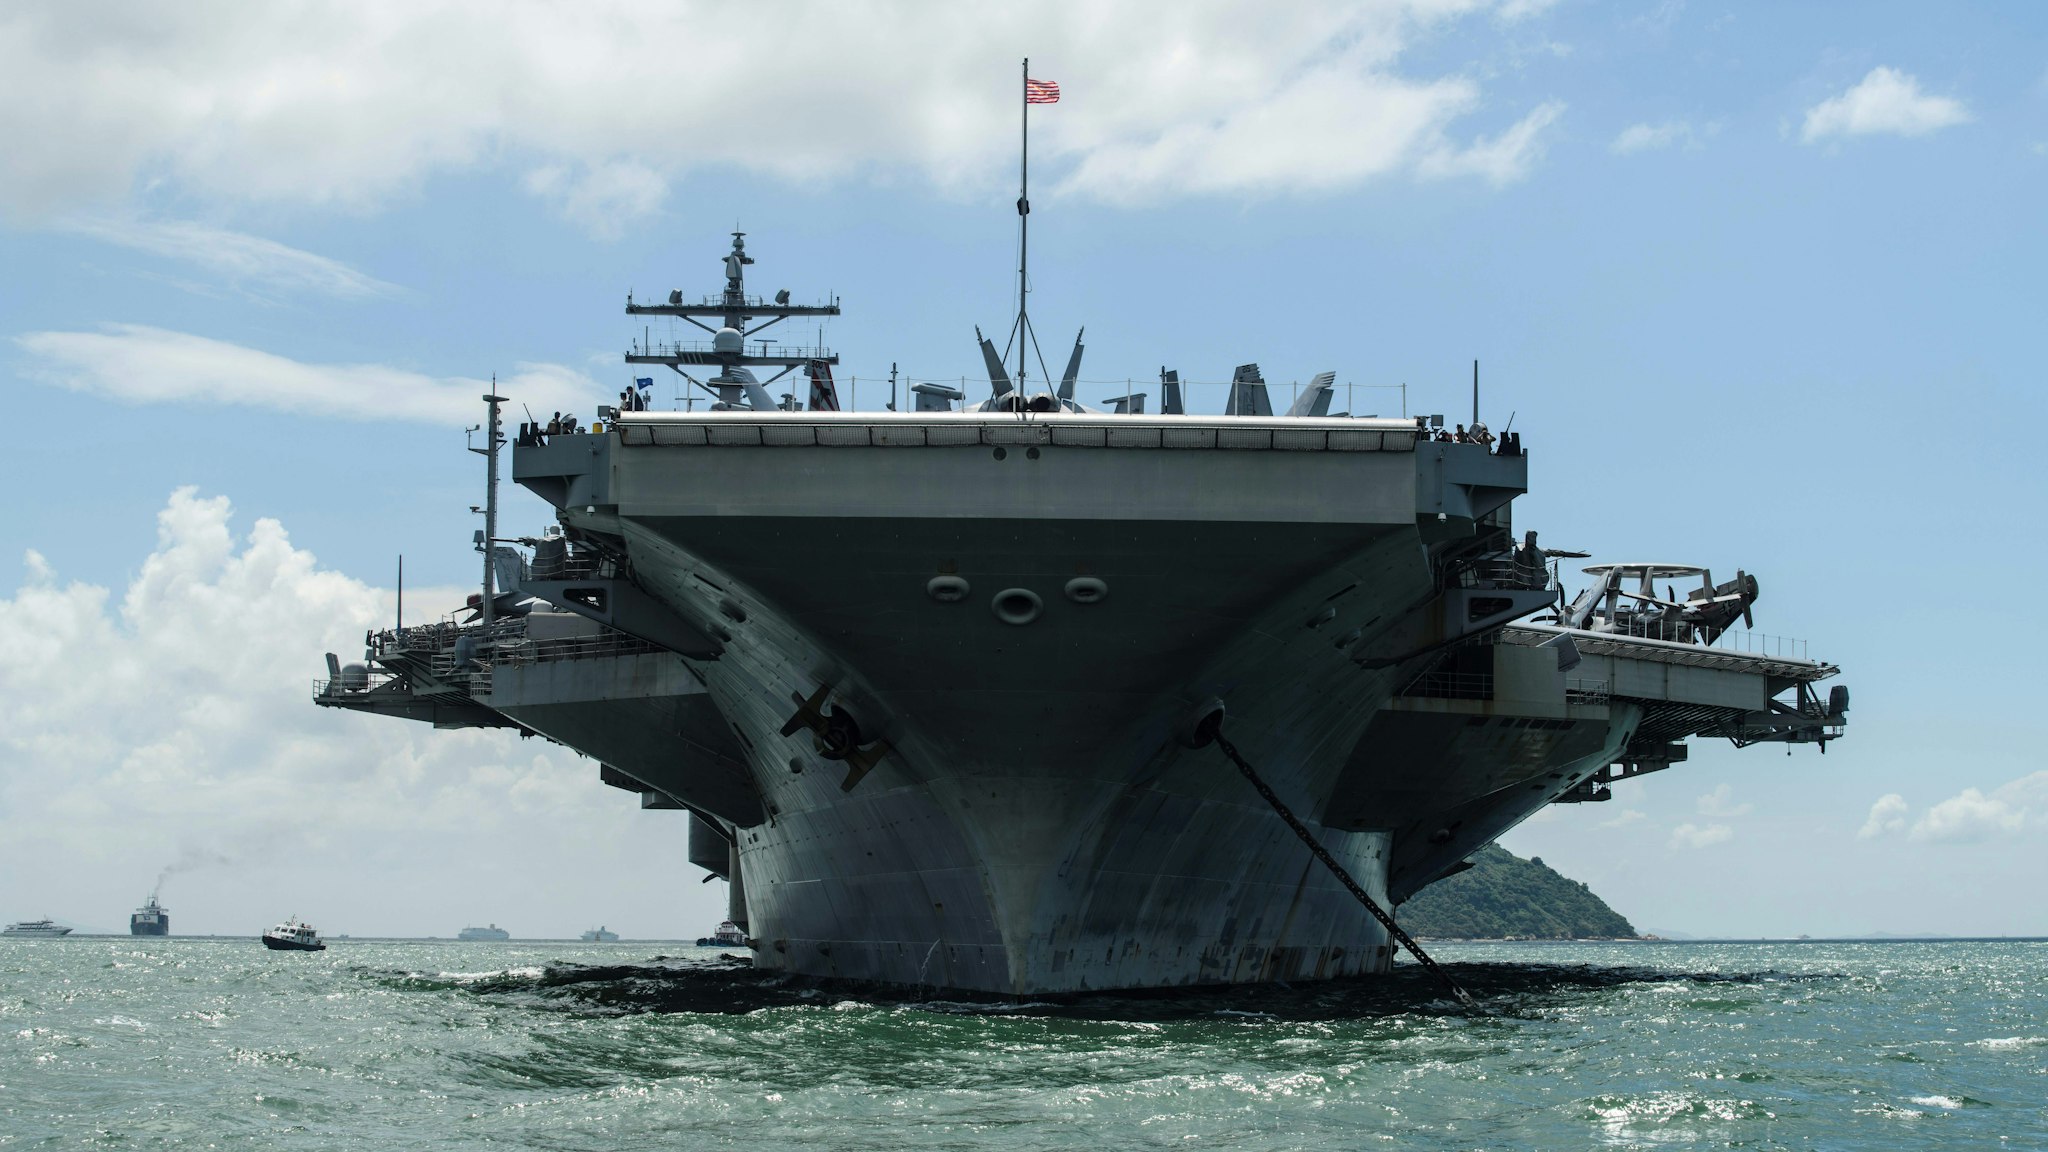 The USS Ronald Reagan (CVN-76) aircraft carrier is seen during a port visit in Hong Kong on October 2, 2017.